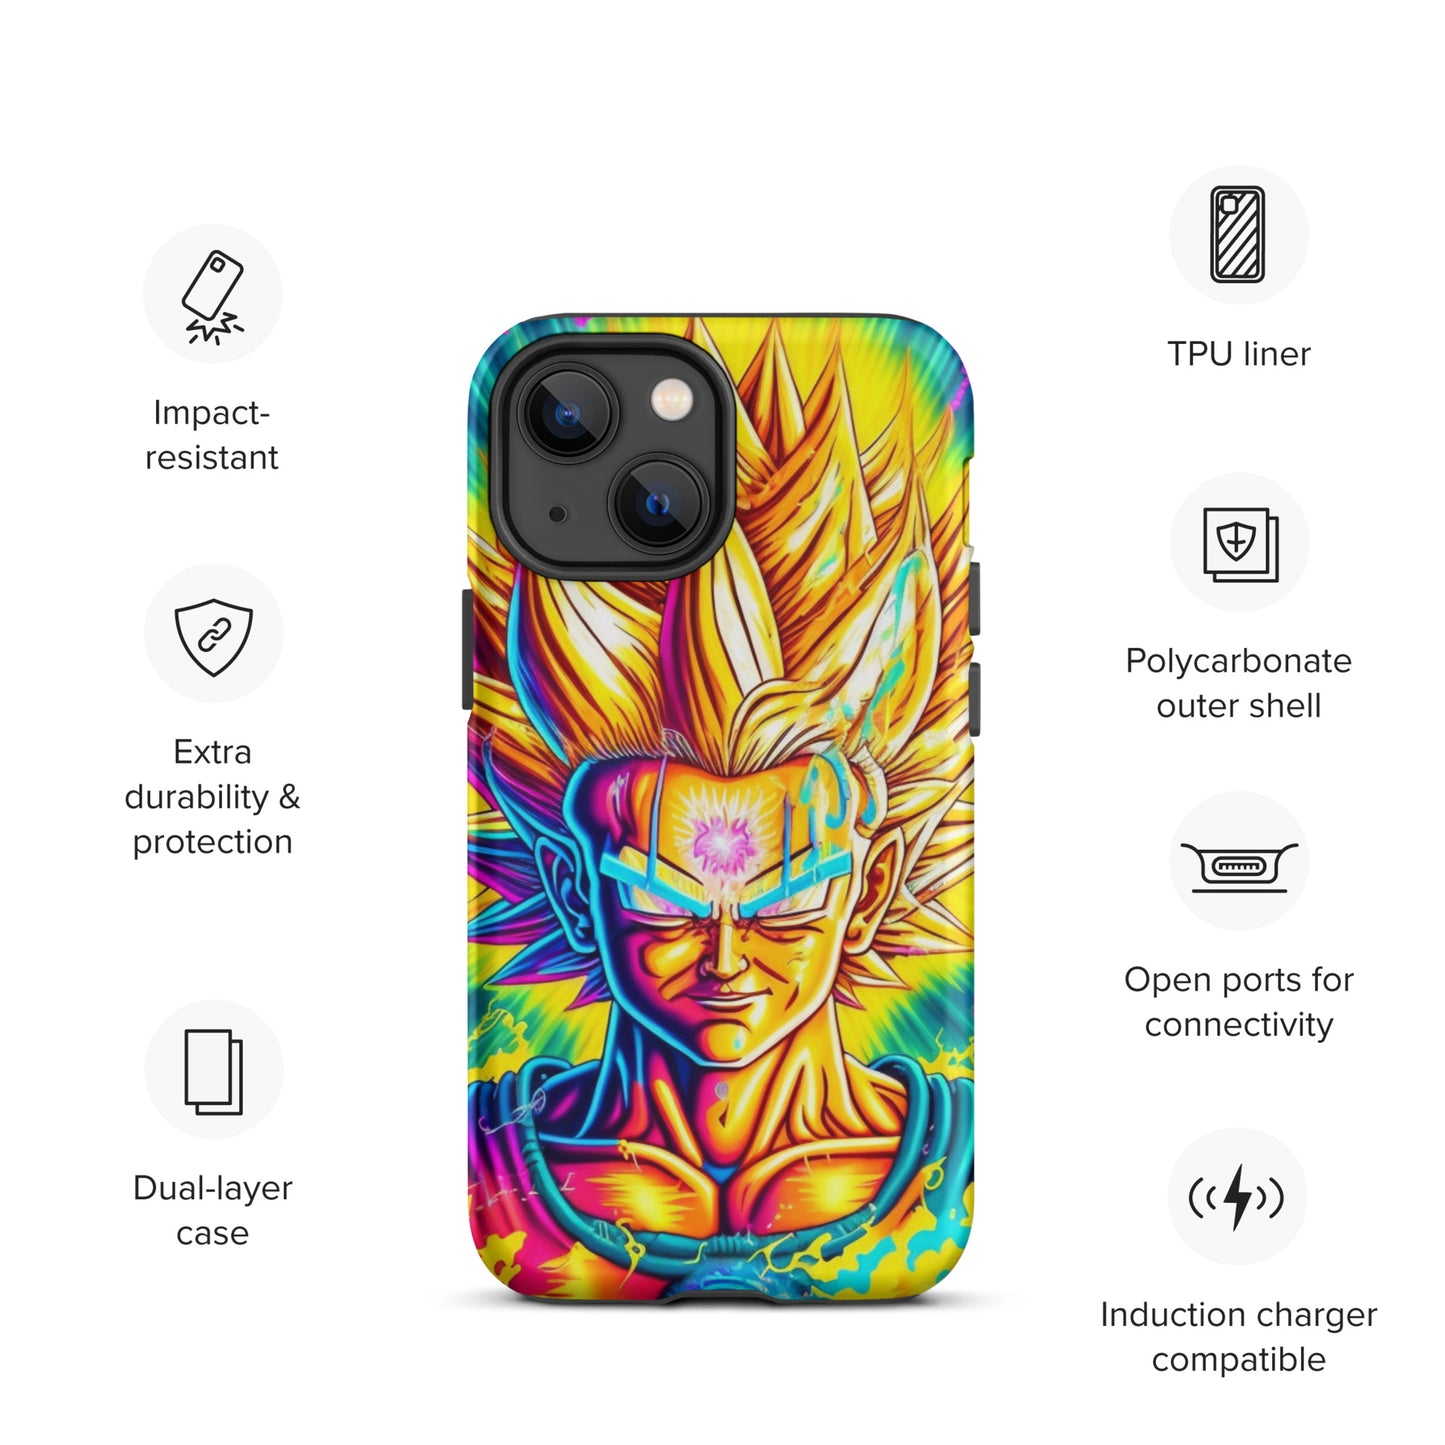 Super Saiyan Trip 1.0 Tough iPhone case